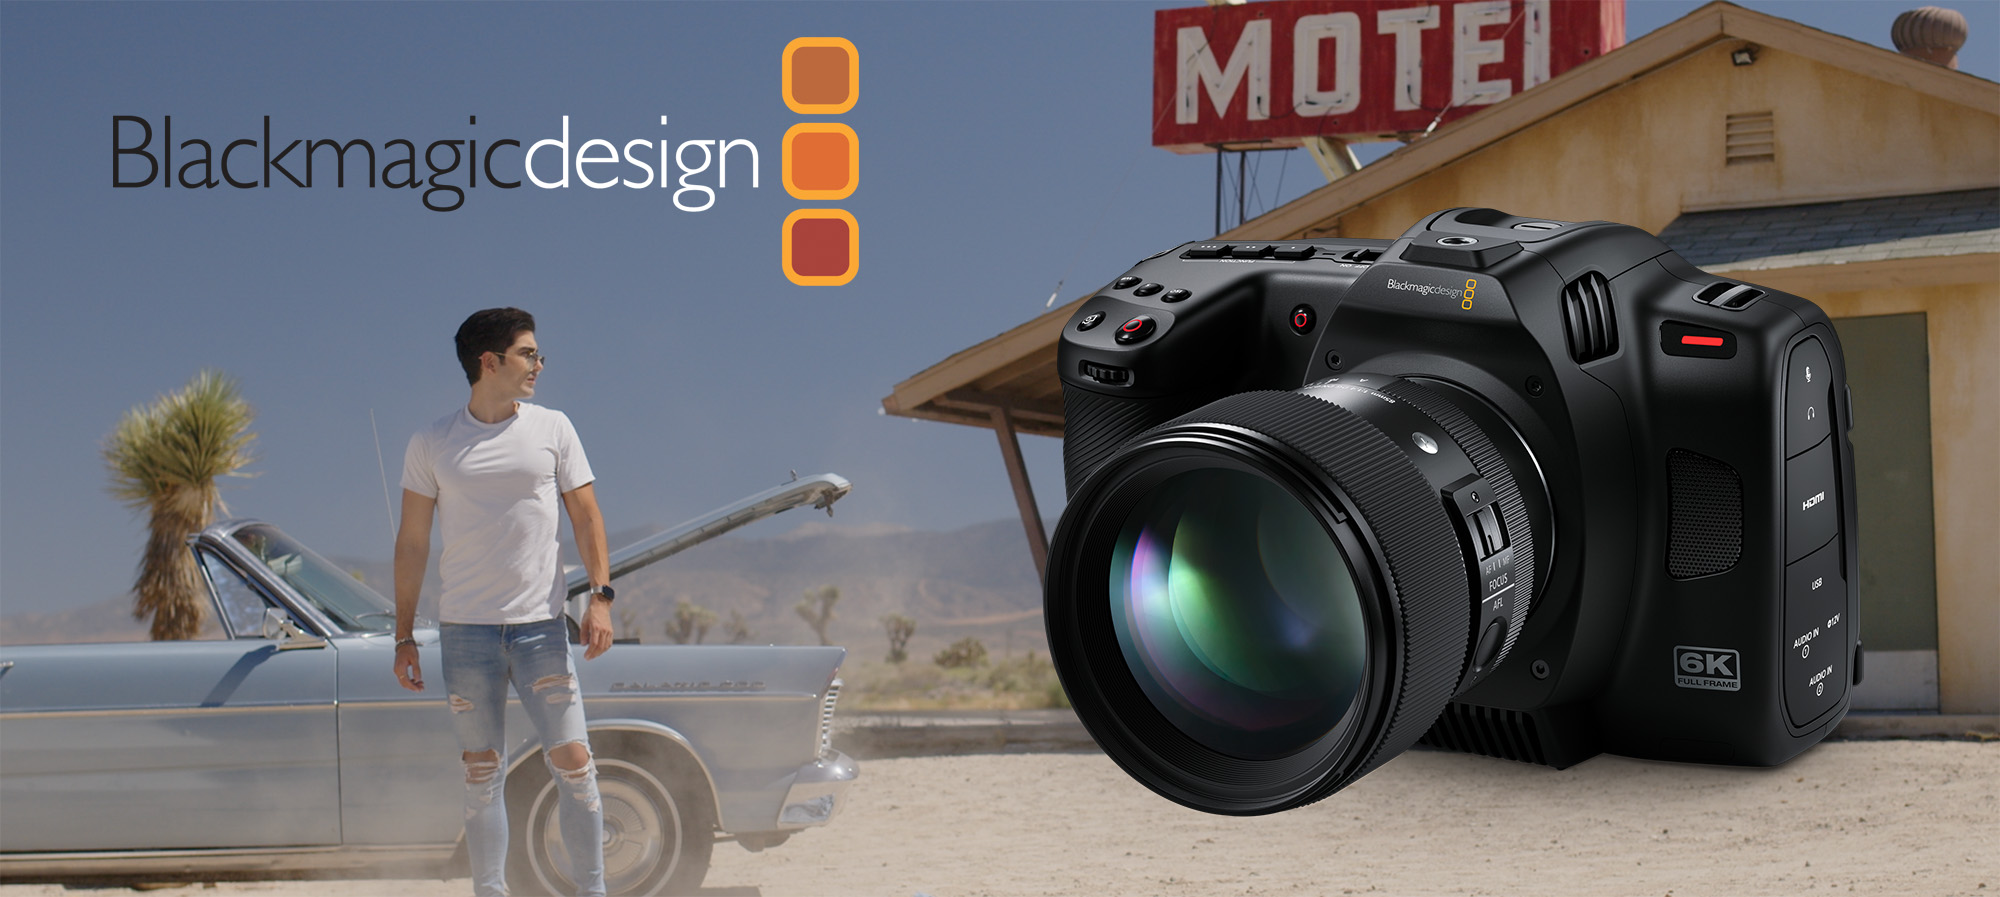 Review: Blackmagic Cinema Camera 6K - Blackmagic Design Expands Its Cinema Camera Lineup 24